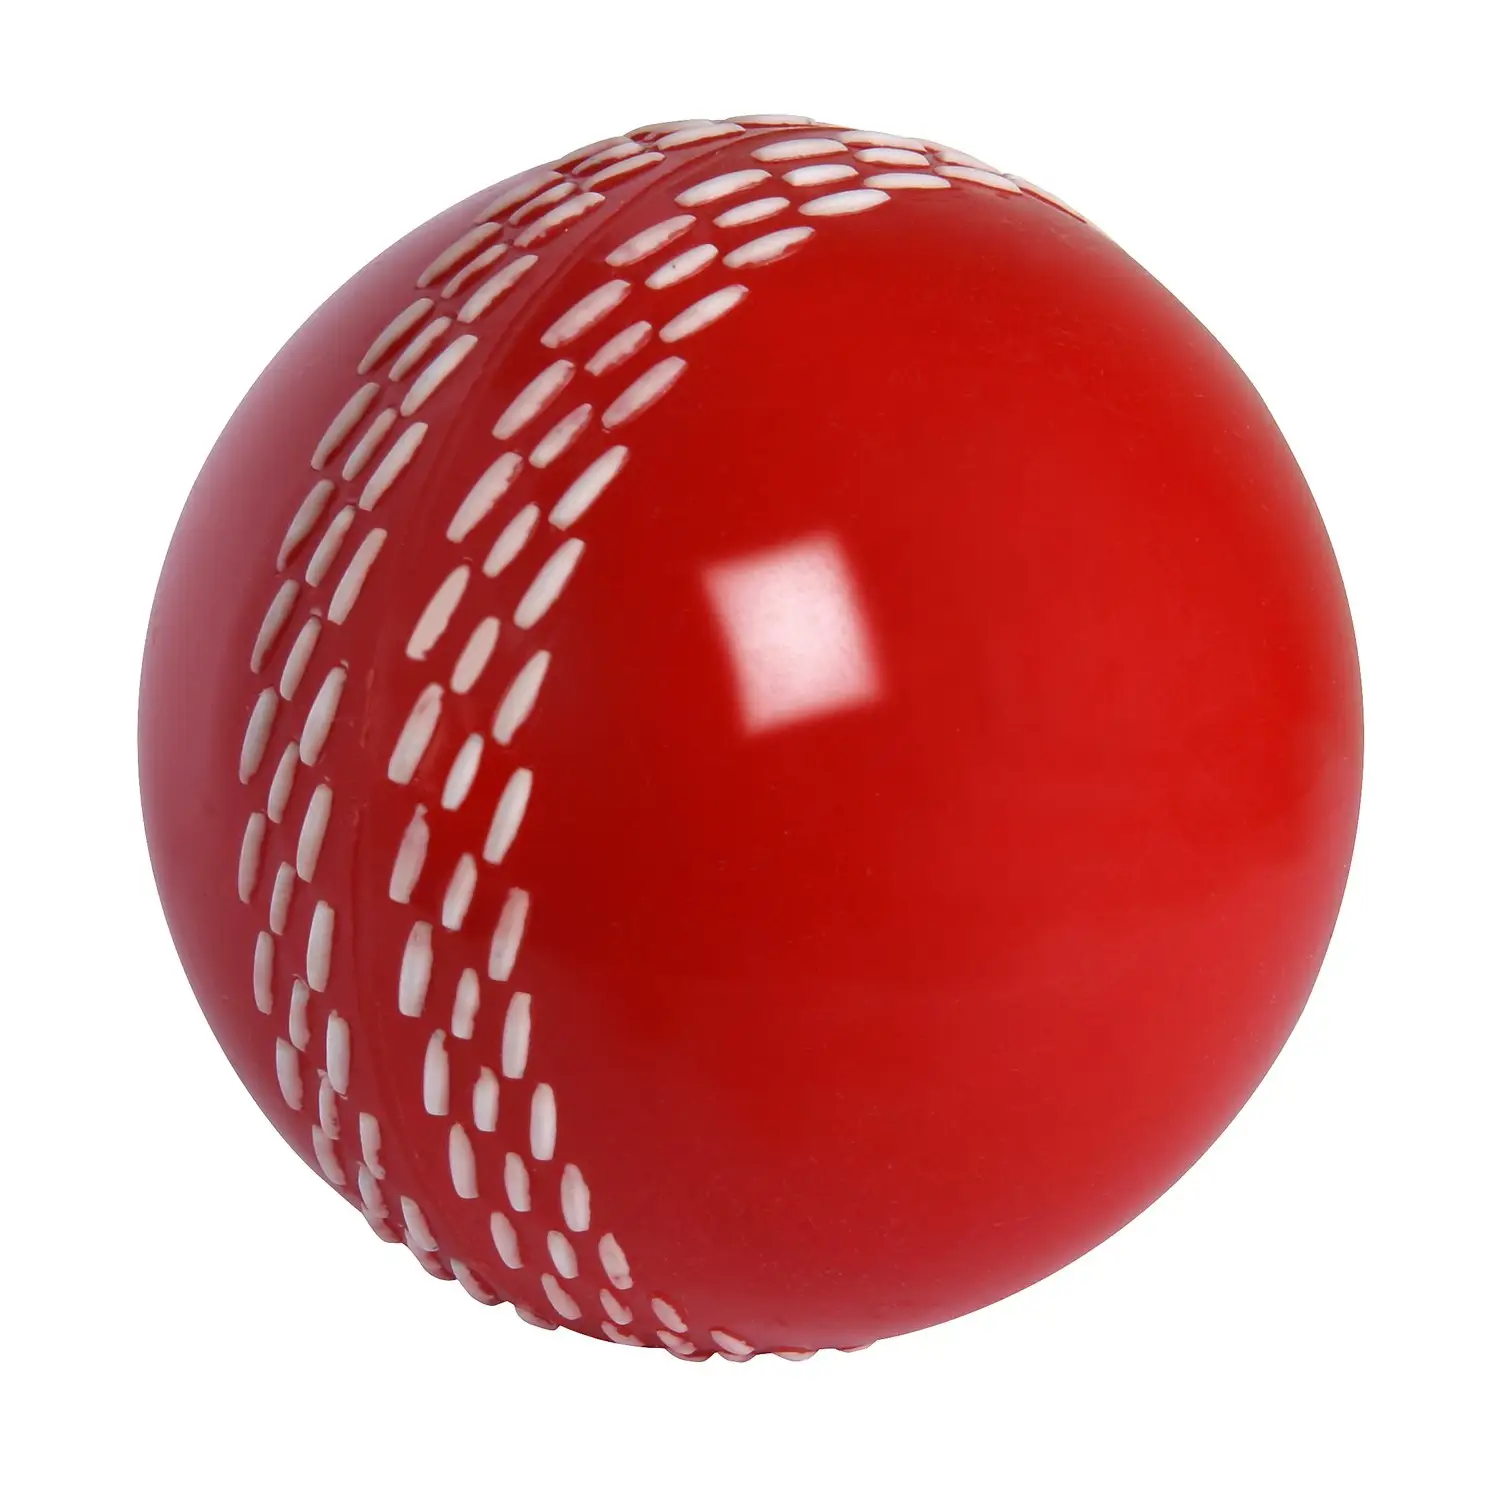 Velocity Cricket Ball Superb Training Device Soft Rubber Ball Gray Nicolls - Red - BALL - TRAINING SENIOR